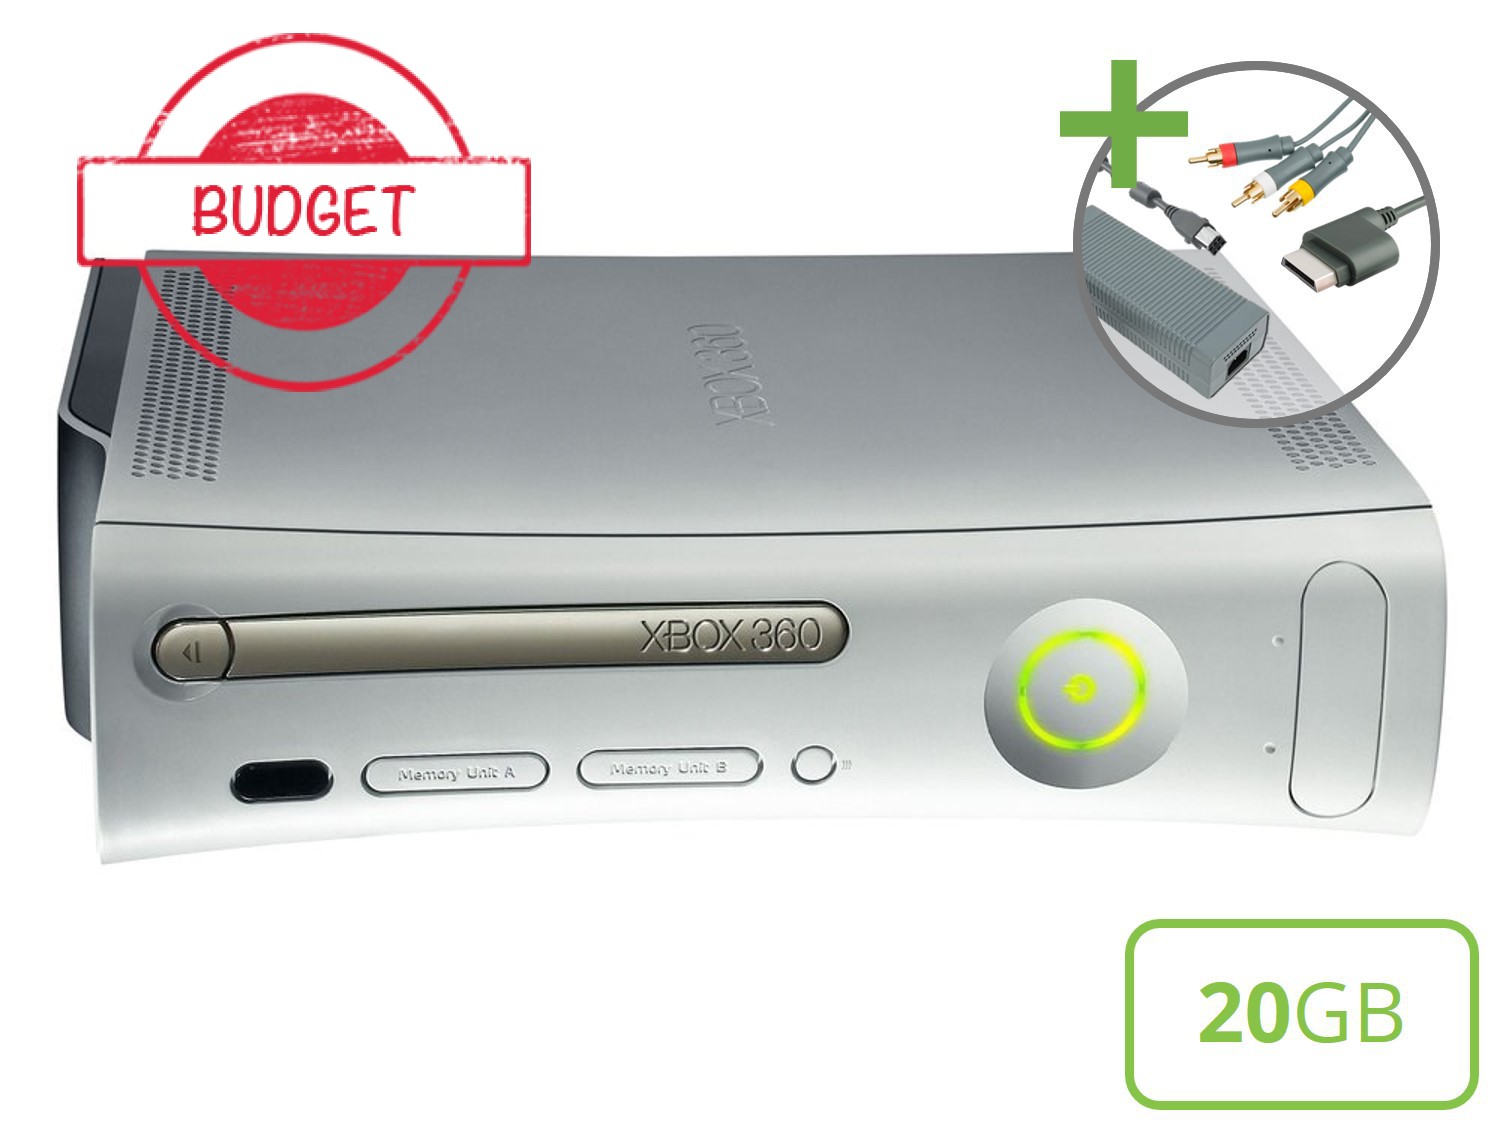 Microsoft Xbox 360 Premium Starter Pack - 20GB Basic Gold Edition - Budget - Xbox 360 Hardware - 2